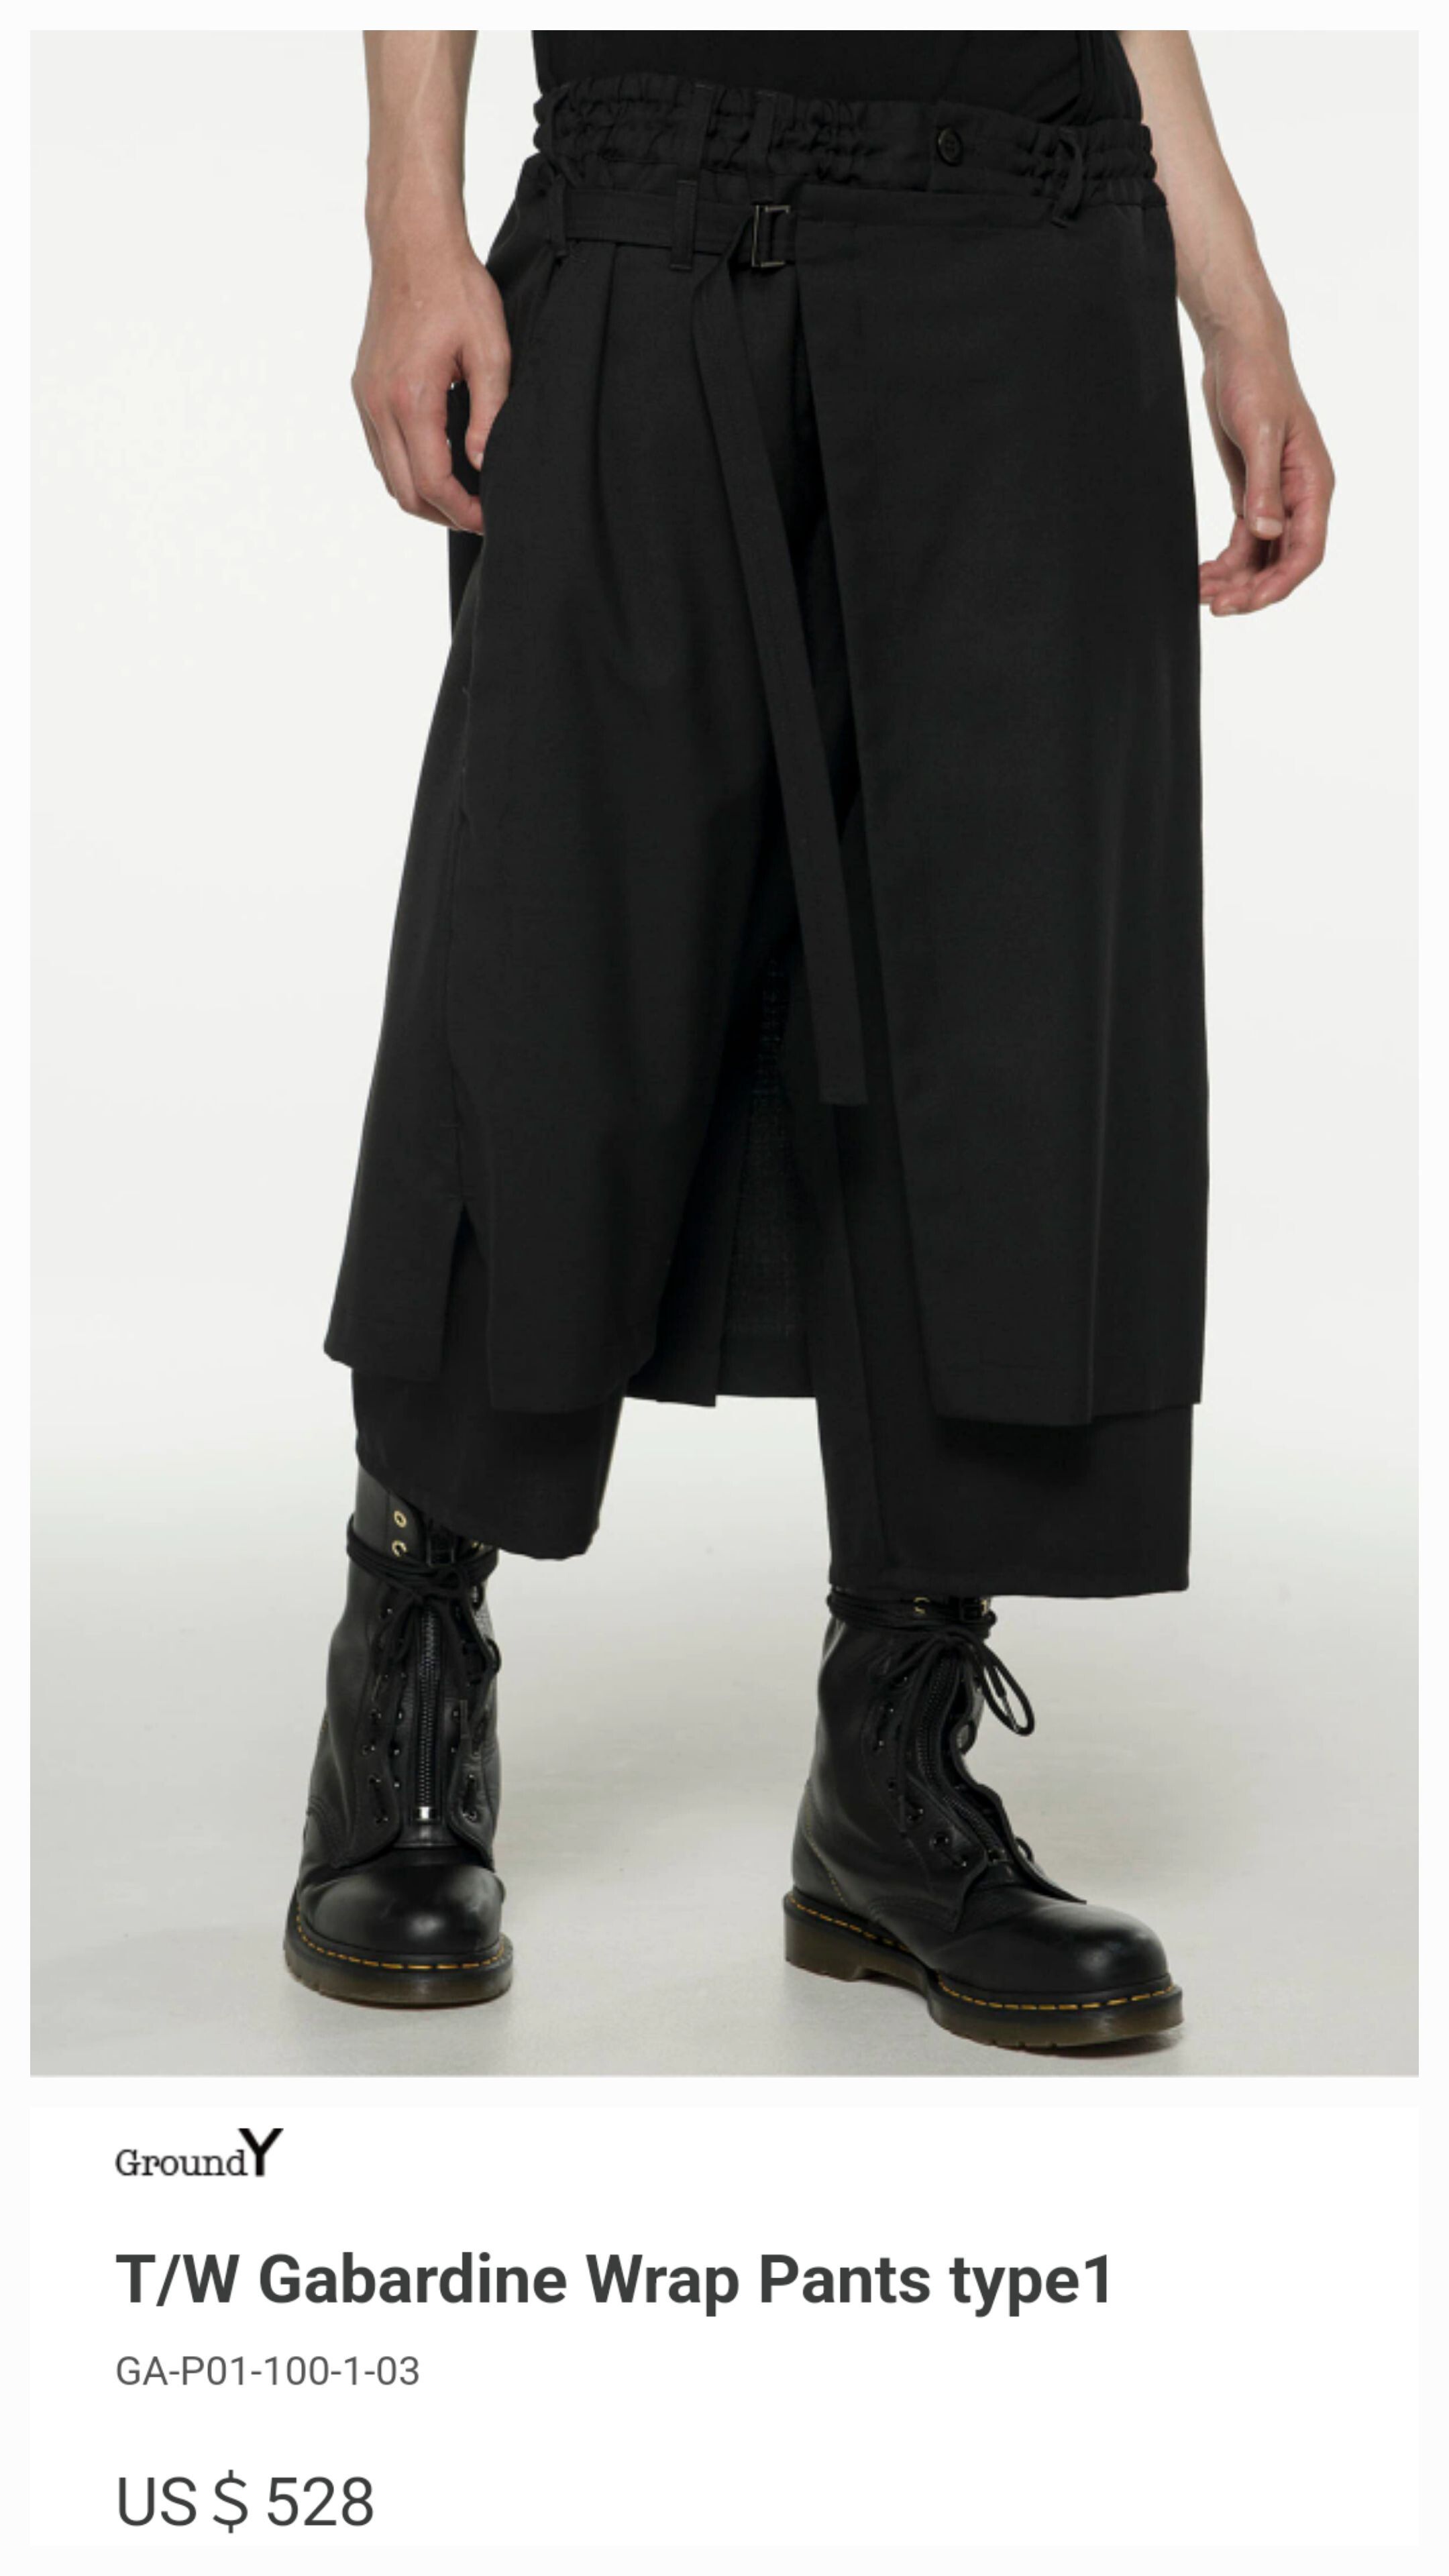 Yohji Yamamoto Ground Y T/W Gabardine Wrap Pants Adjustable Waist | Grailed